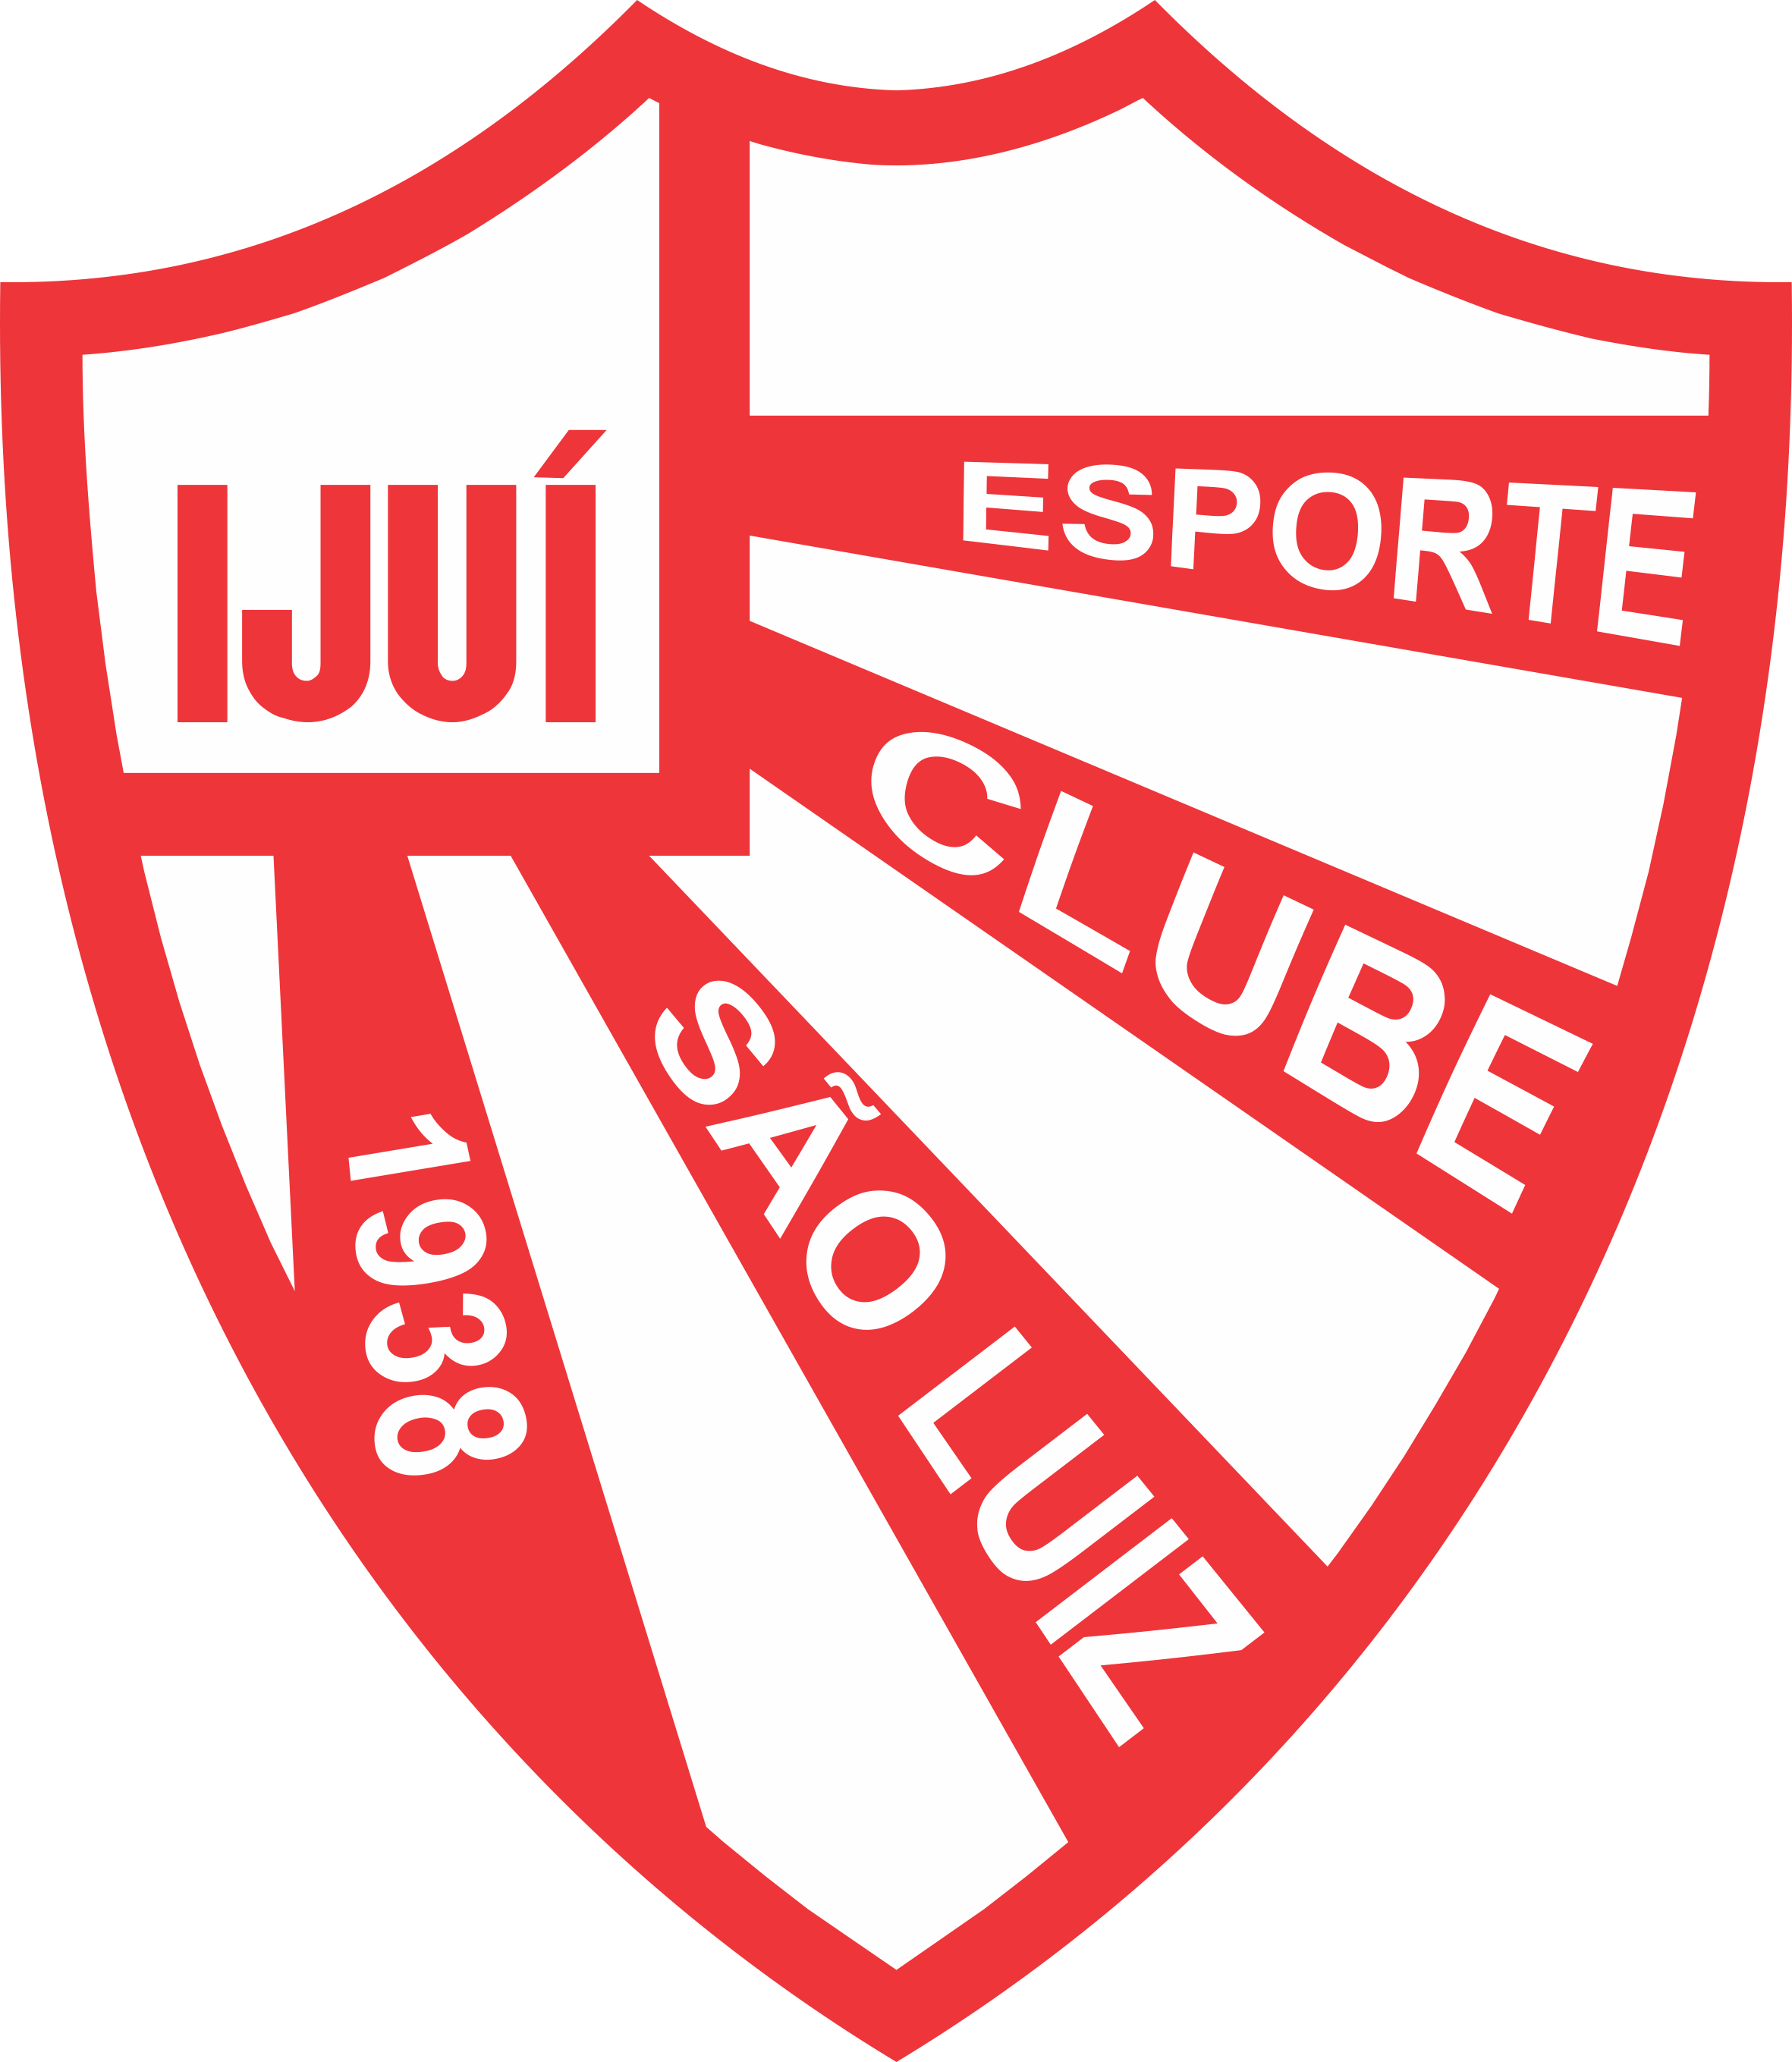 Sao Luiz team logo